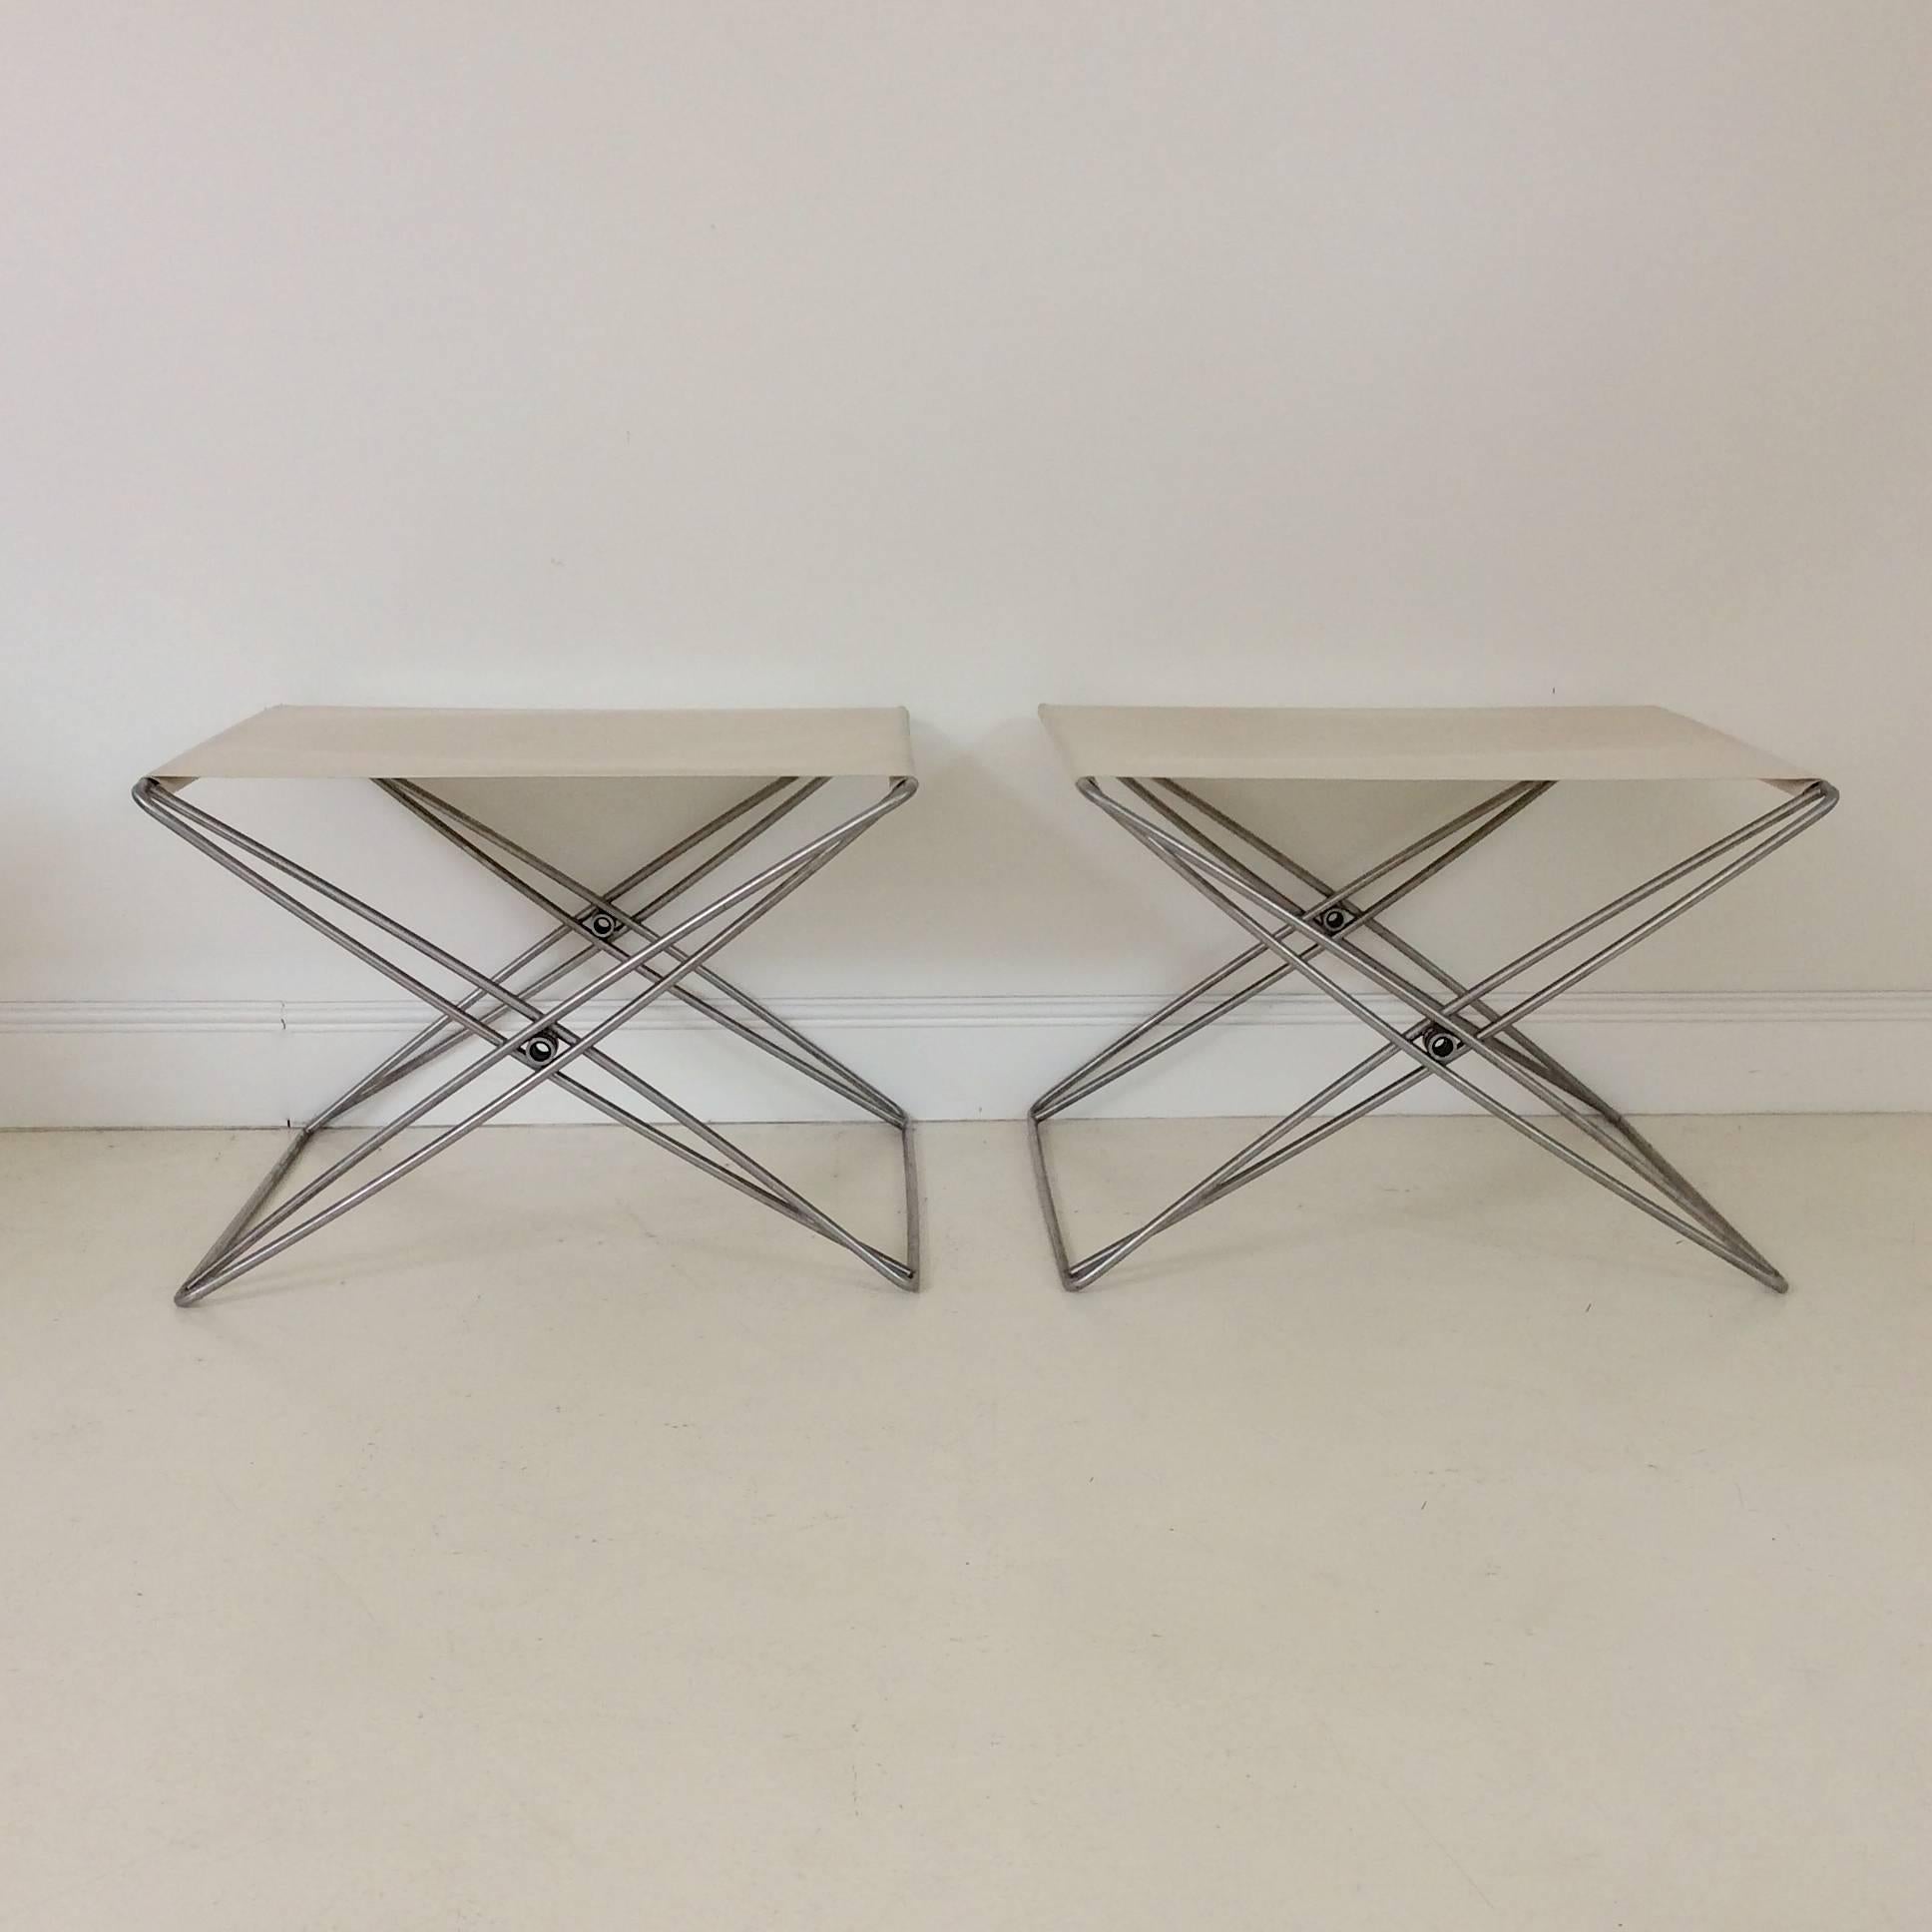 Jorgen Gammelgaard pair of folding stools,, circa 1970, Denmark.
Nickeled steel and nylon, edited by Dansk Forum.
Dimensions: 41 cm H, 57 cm W, 47 cm D.
Good original condition.
 